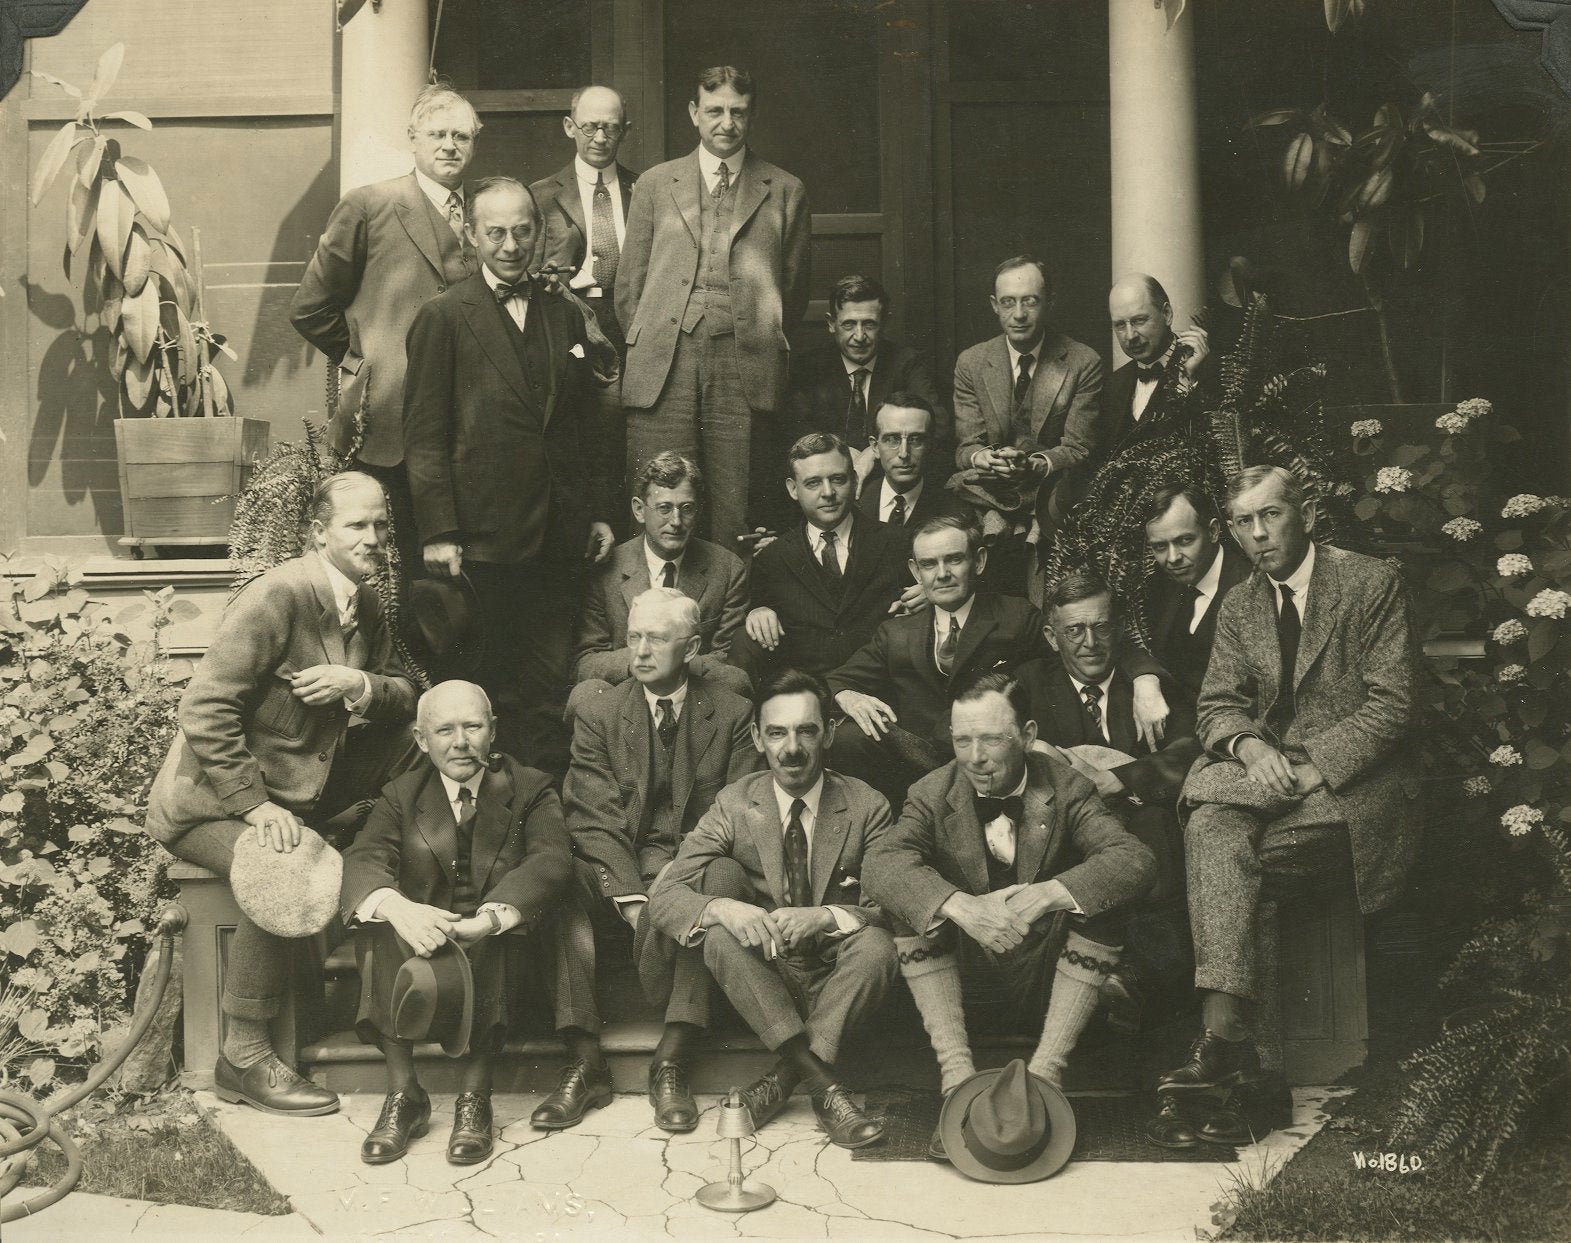 The Goodfellows, c. 1920